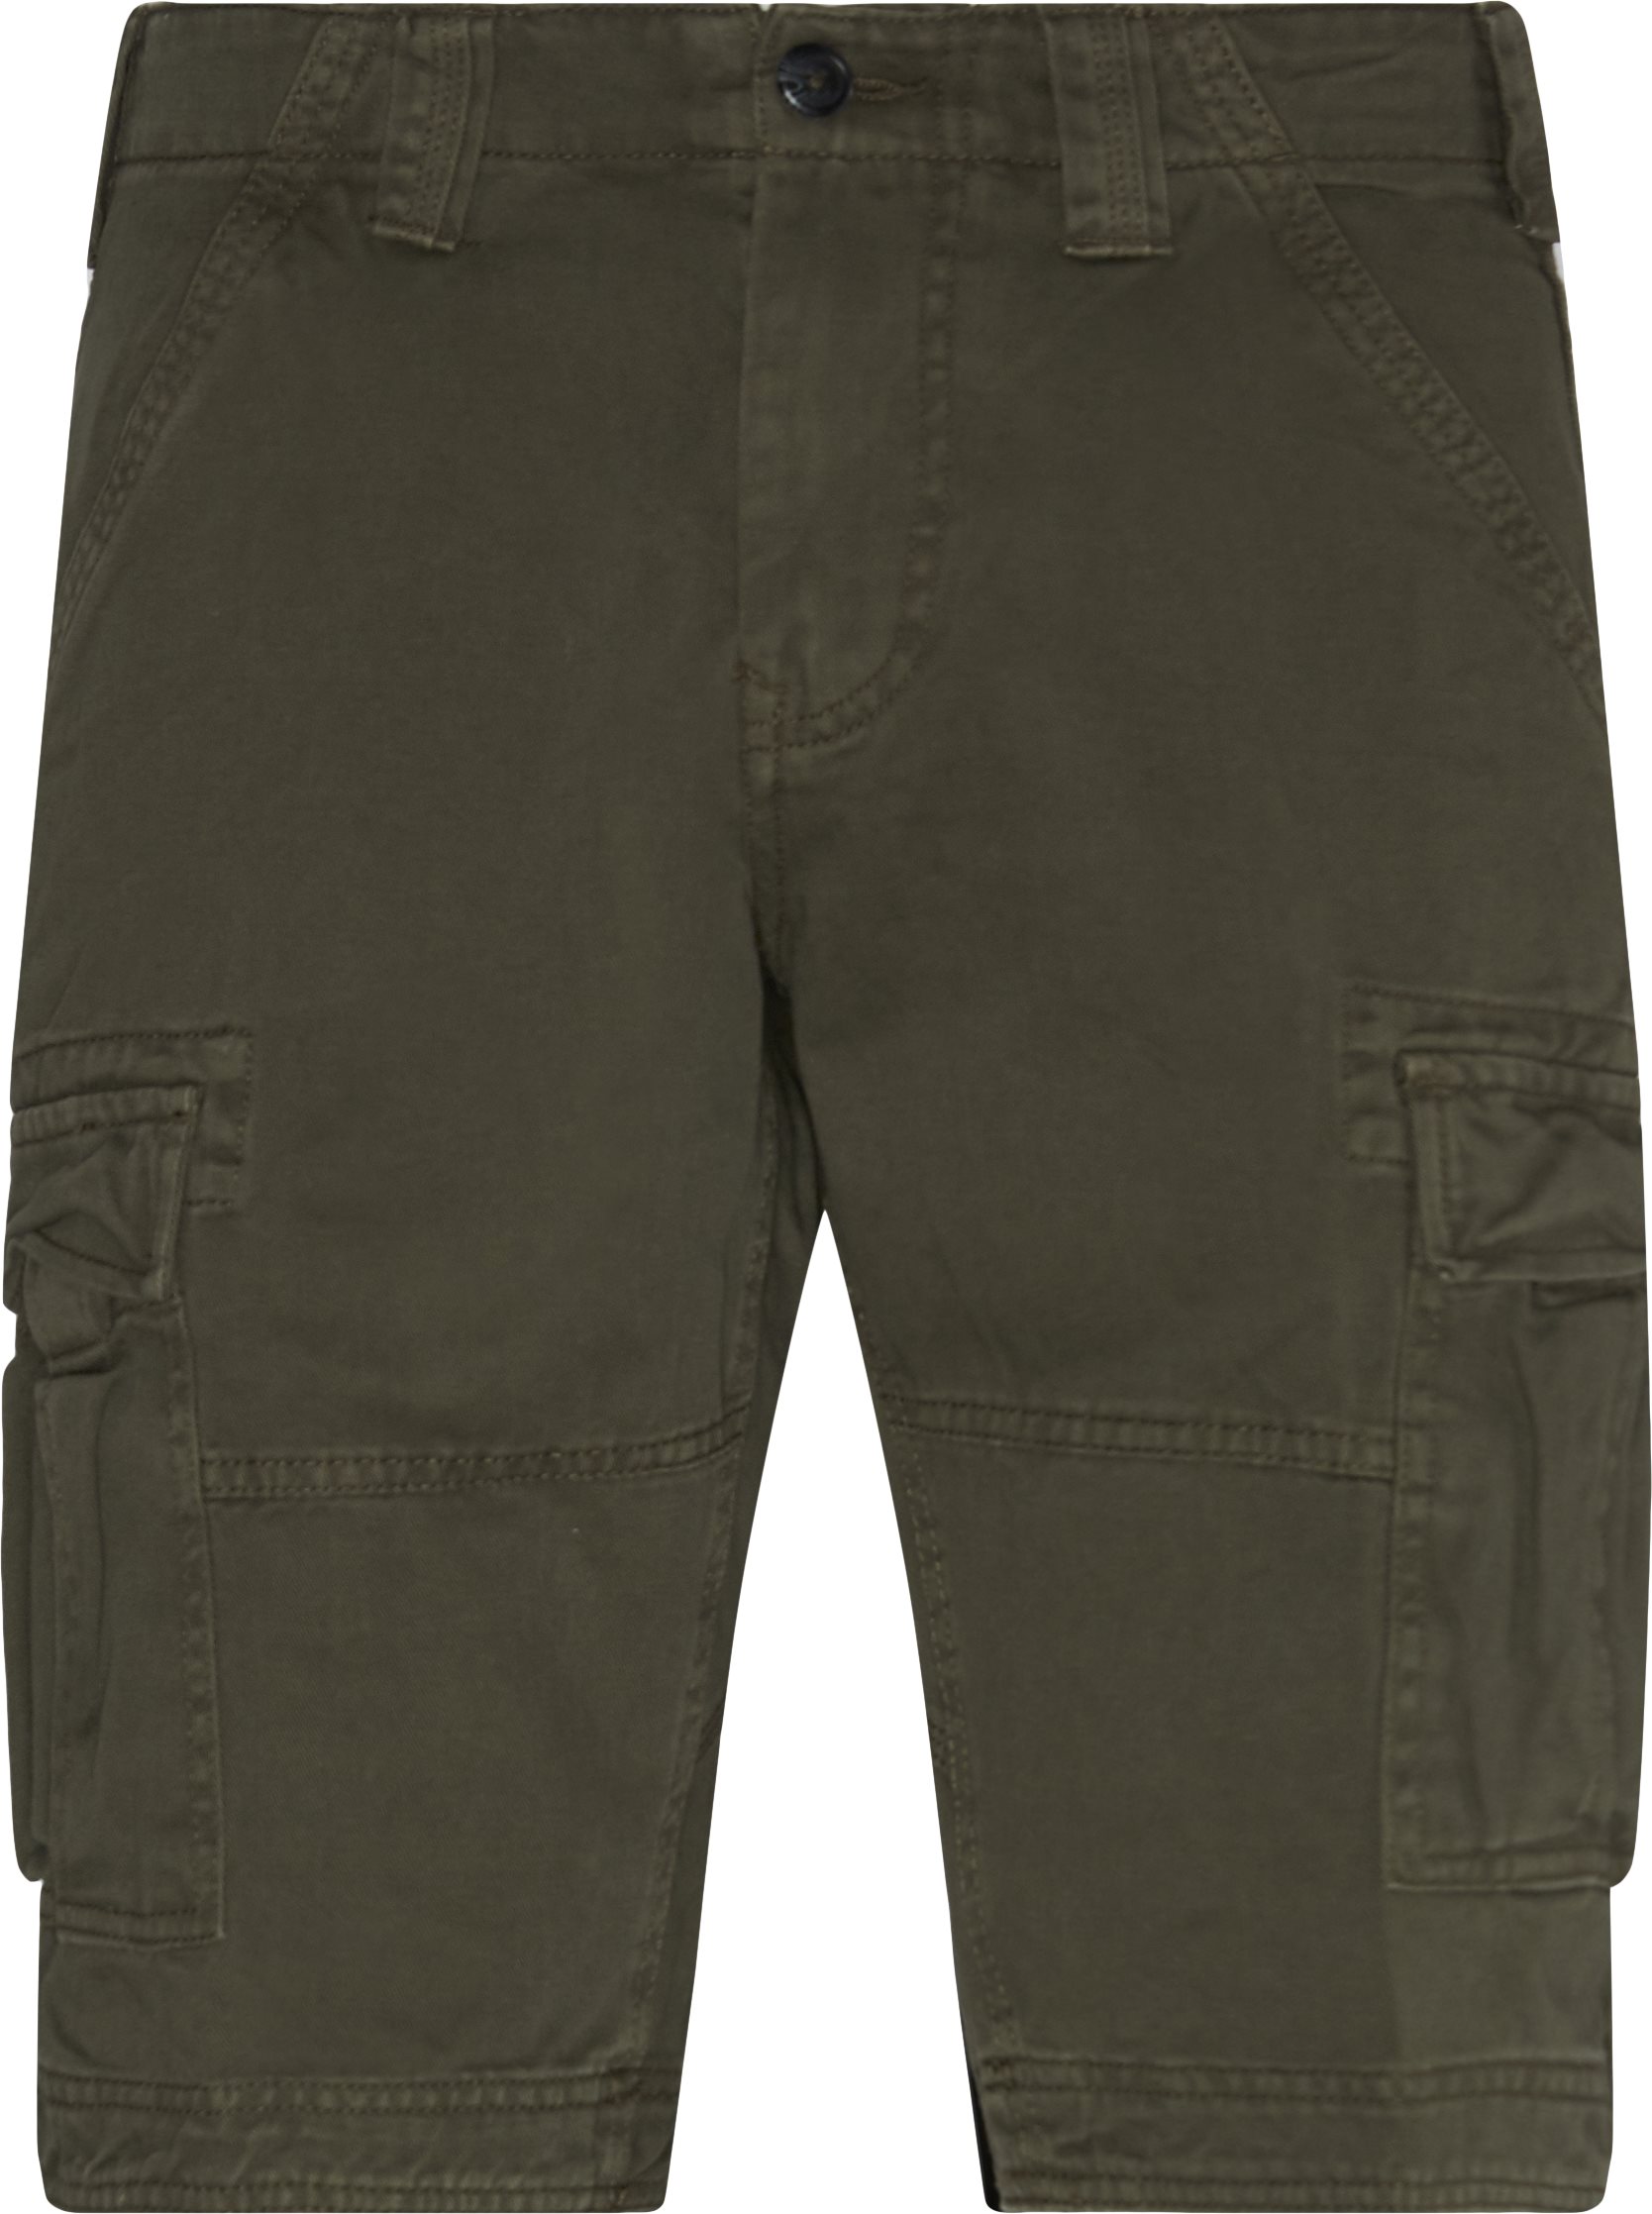 Nairobi Cargo Shorts - Shorts - Regular fit - Army